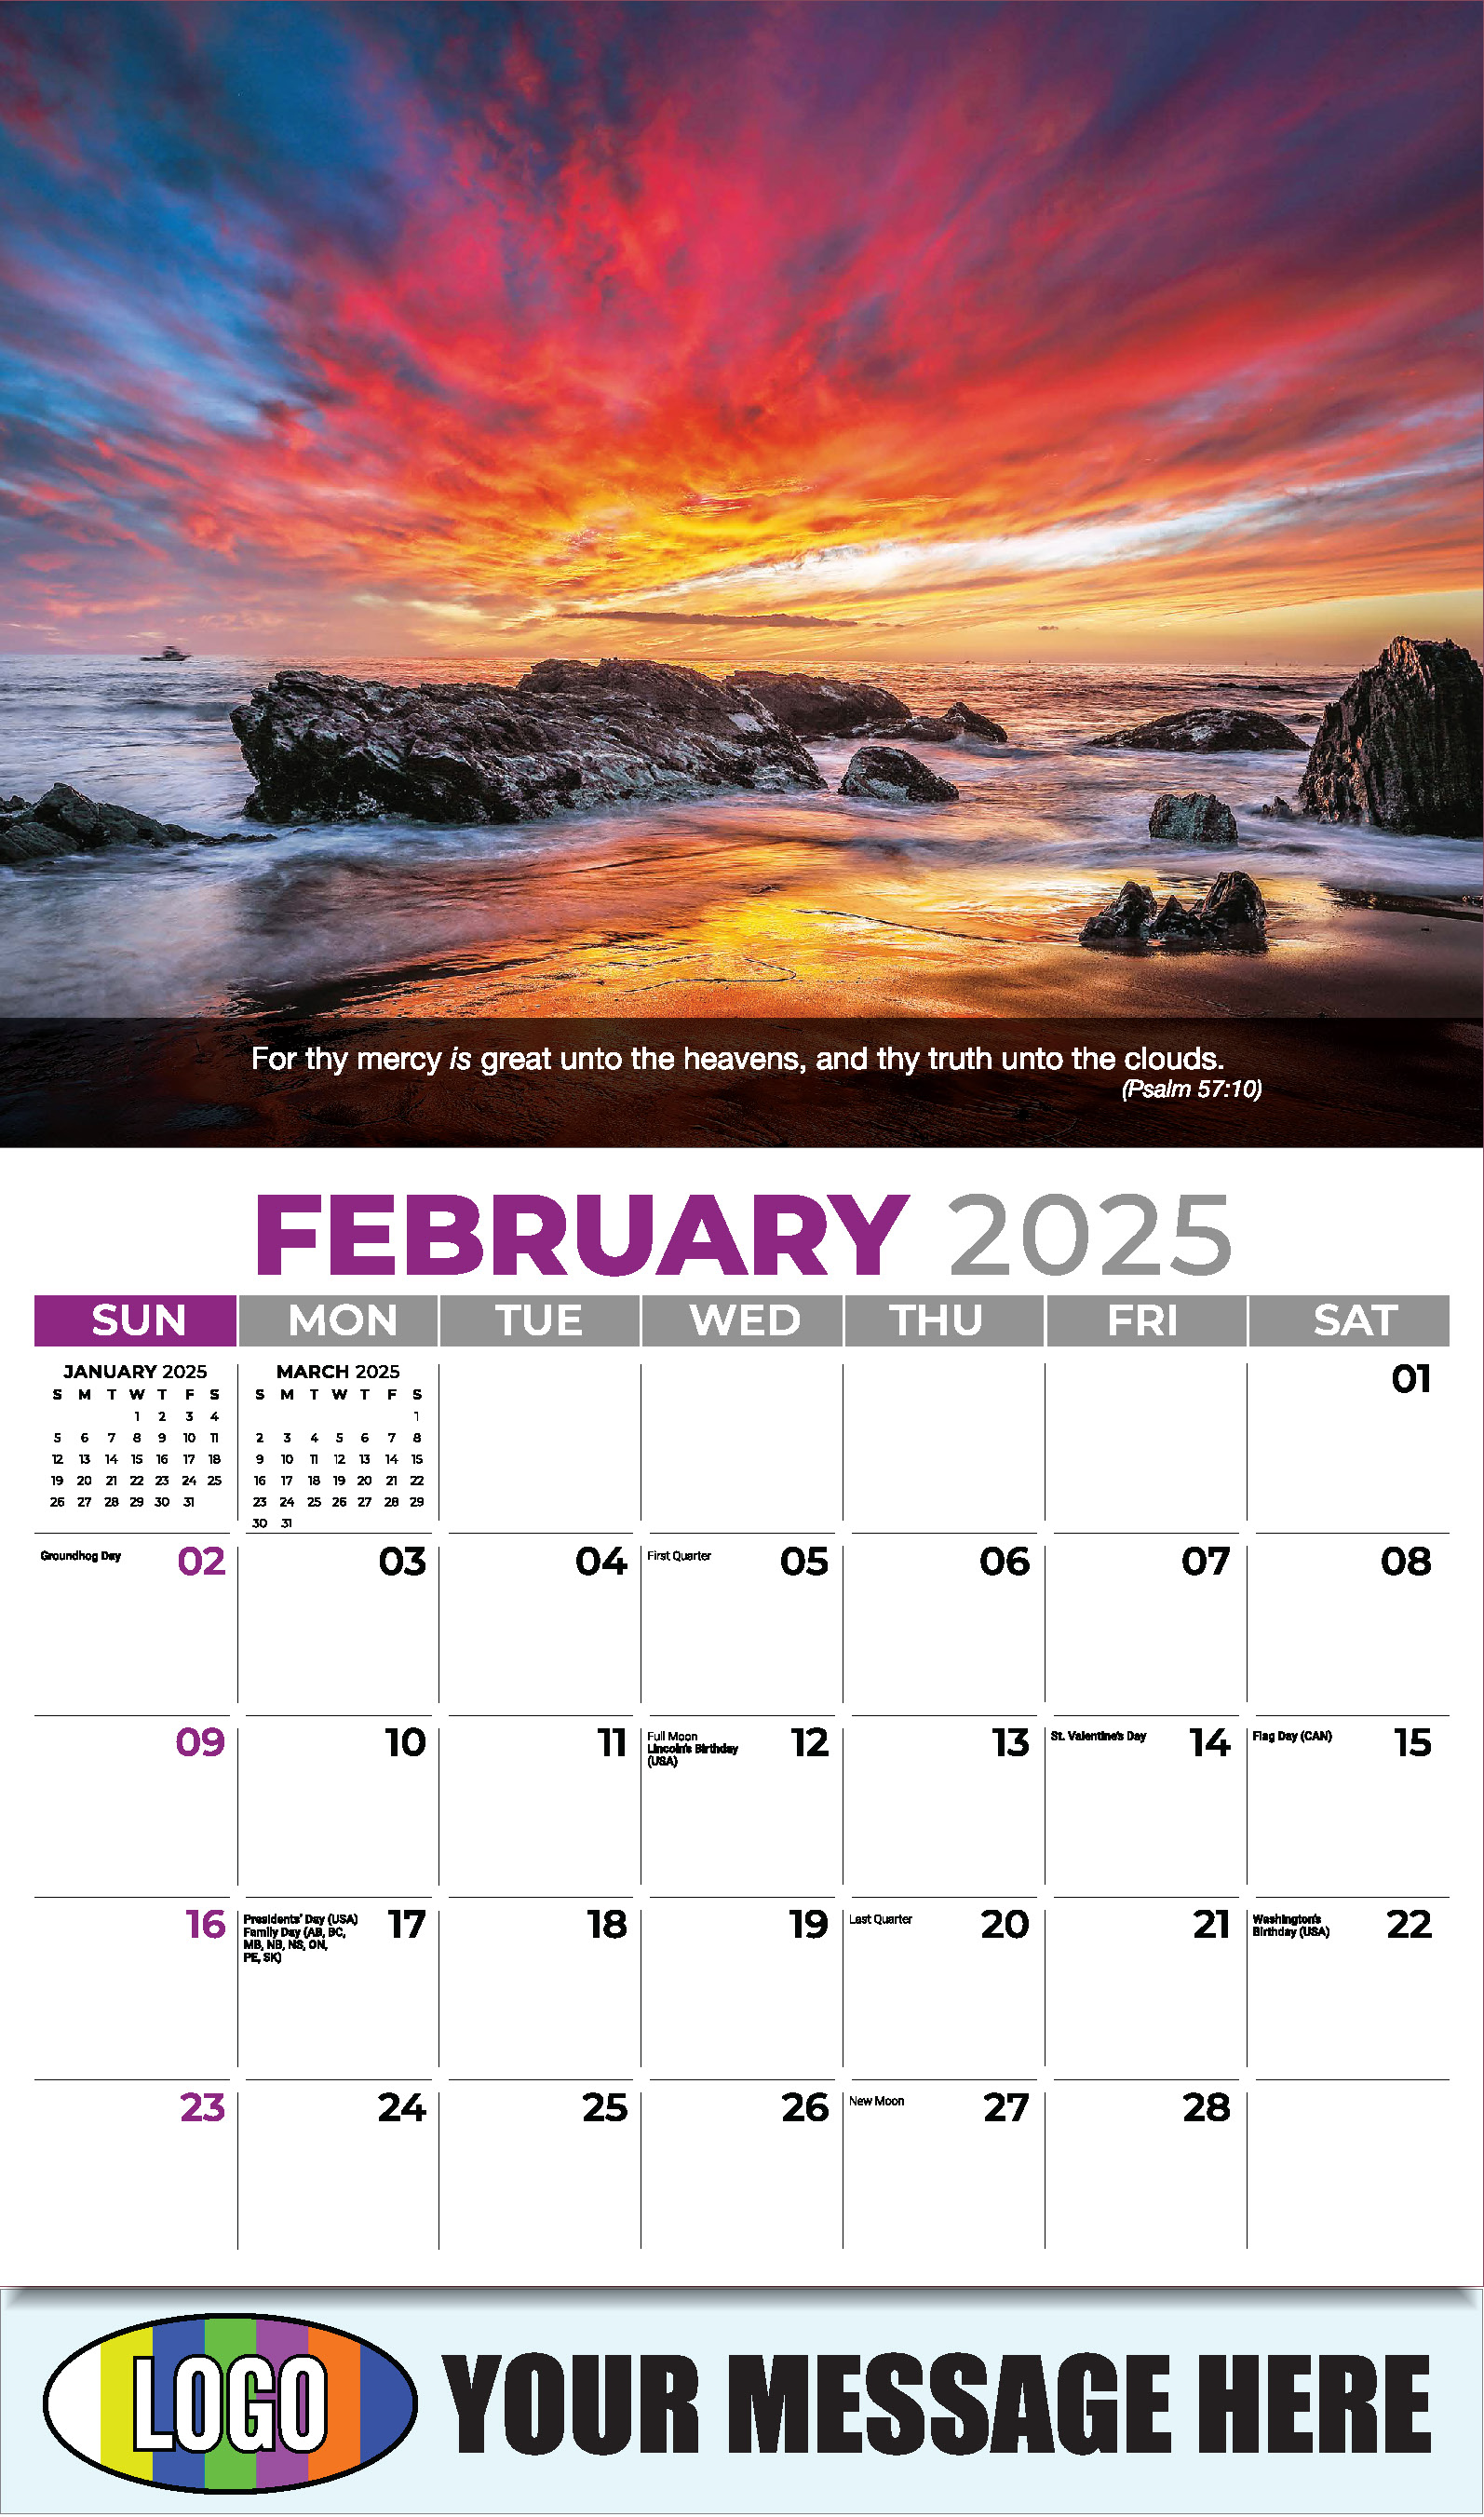 Faith Passages 2025 Christian Business Advertising Calendar - February